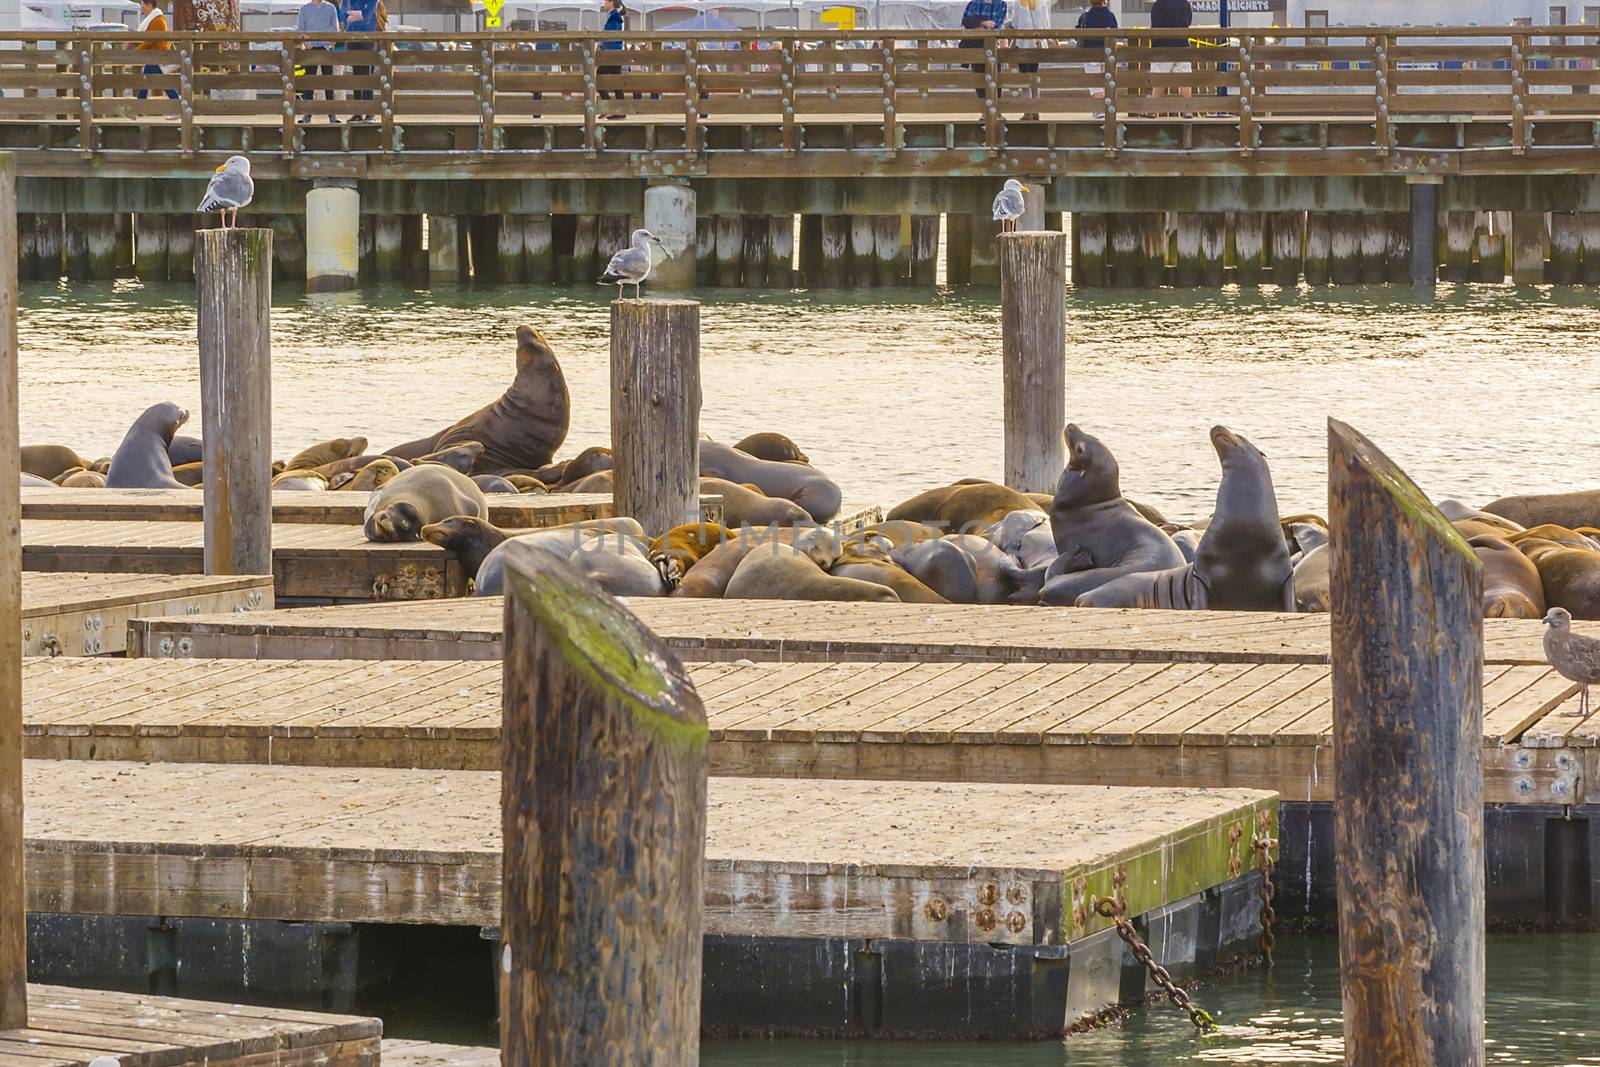 sea lions on Pier 39 by rarrarorro